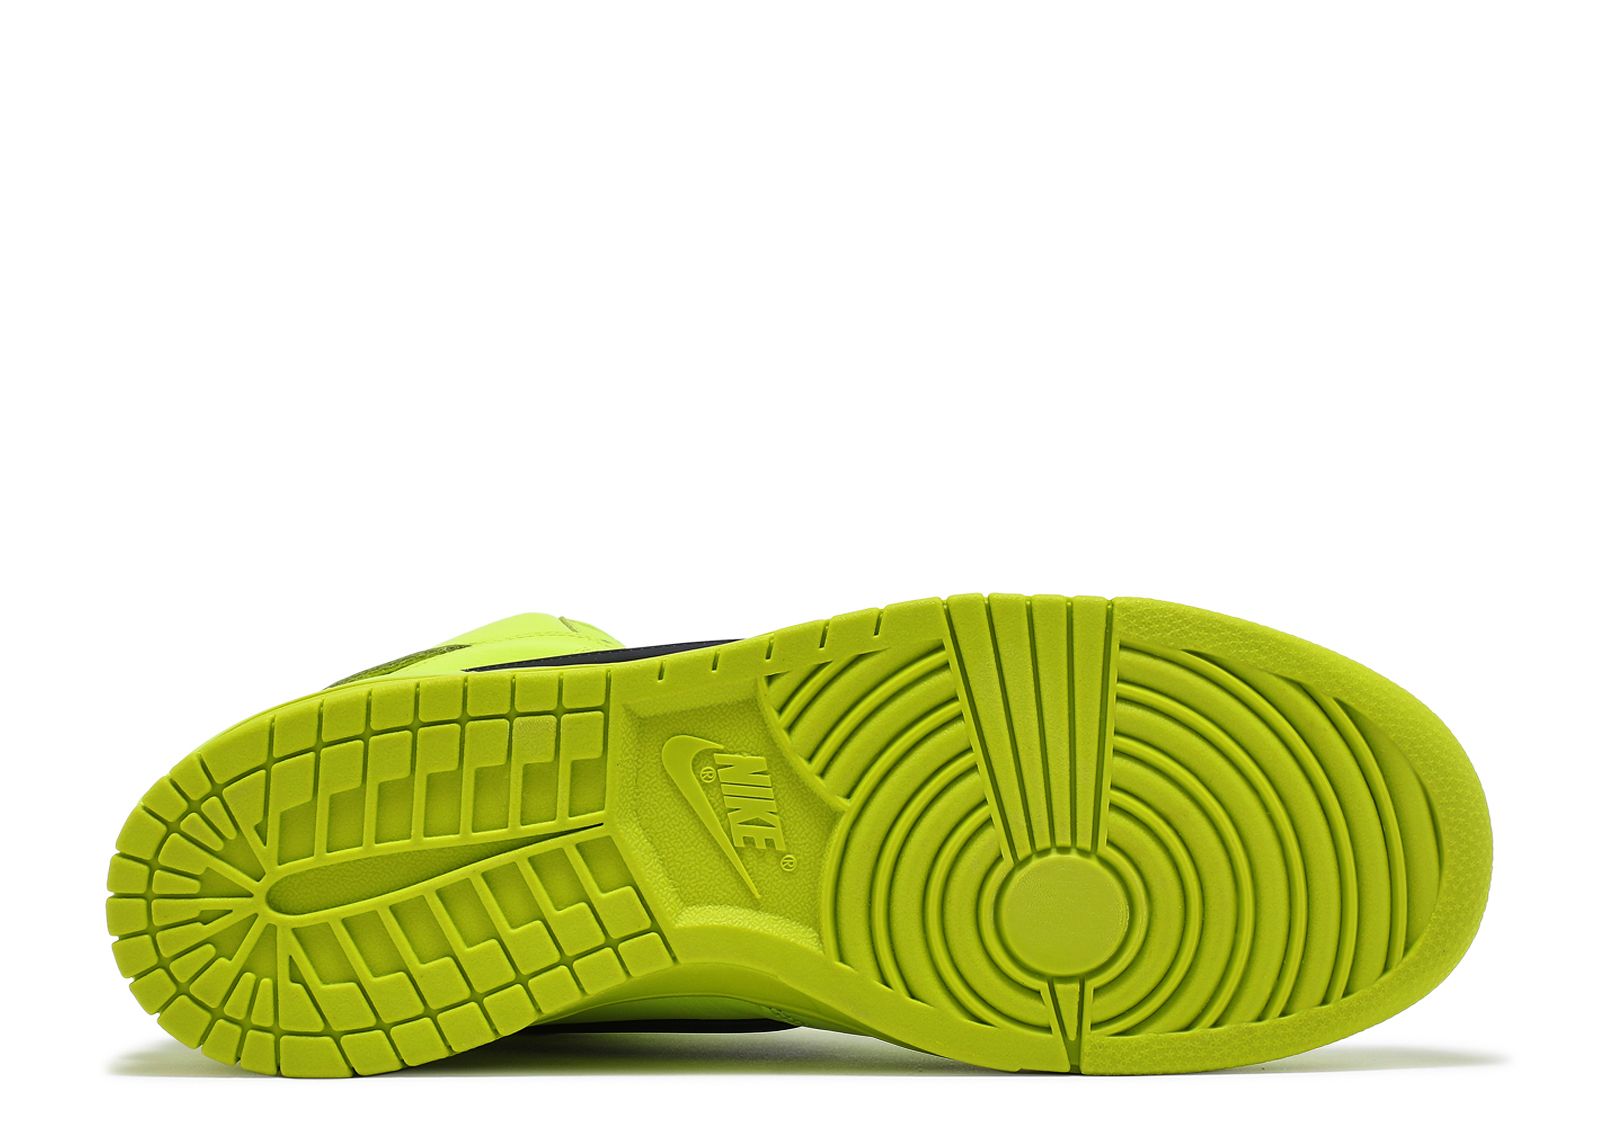 AMBUSH X Dunk High 'Flash Lime' - Nike - CU7544 300 - flash lime